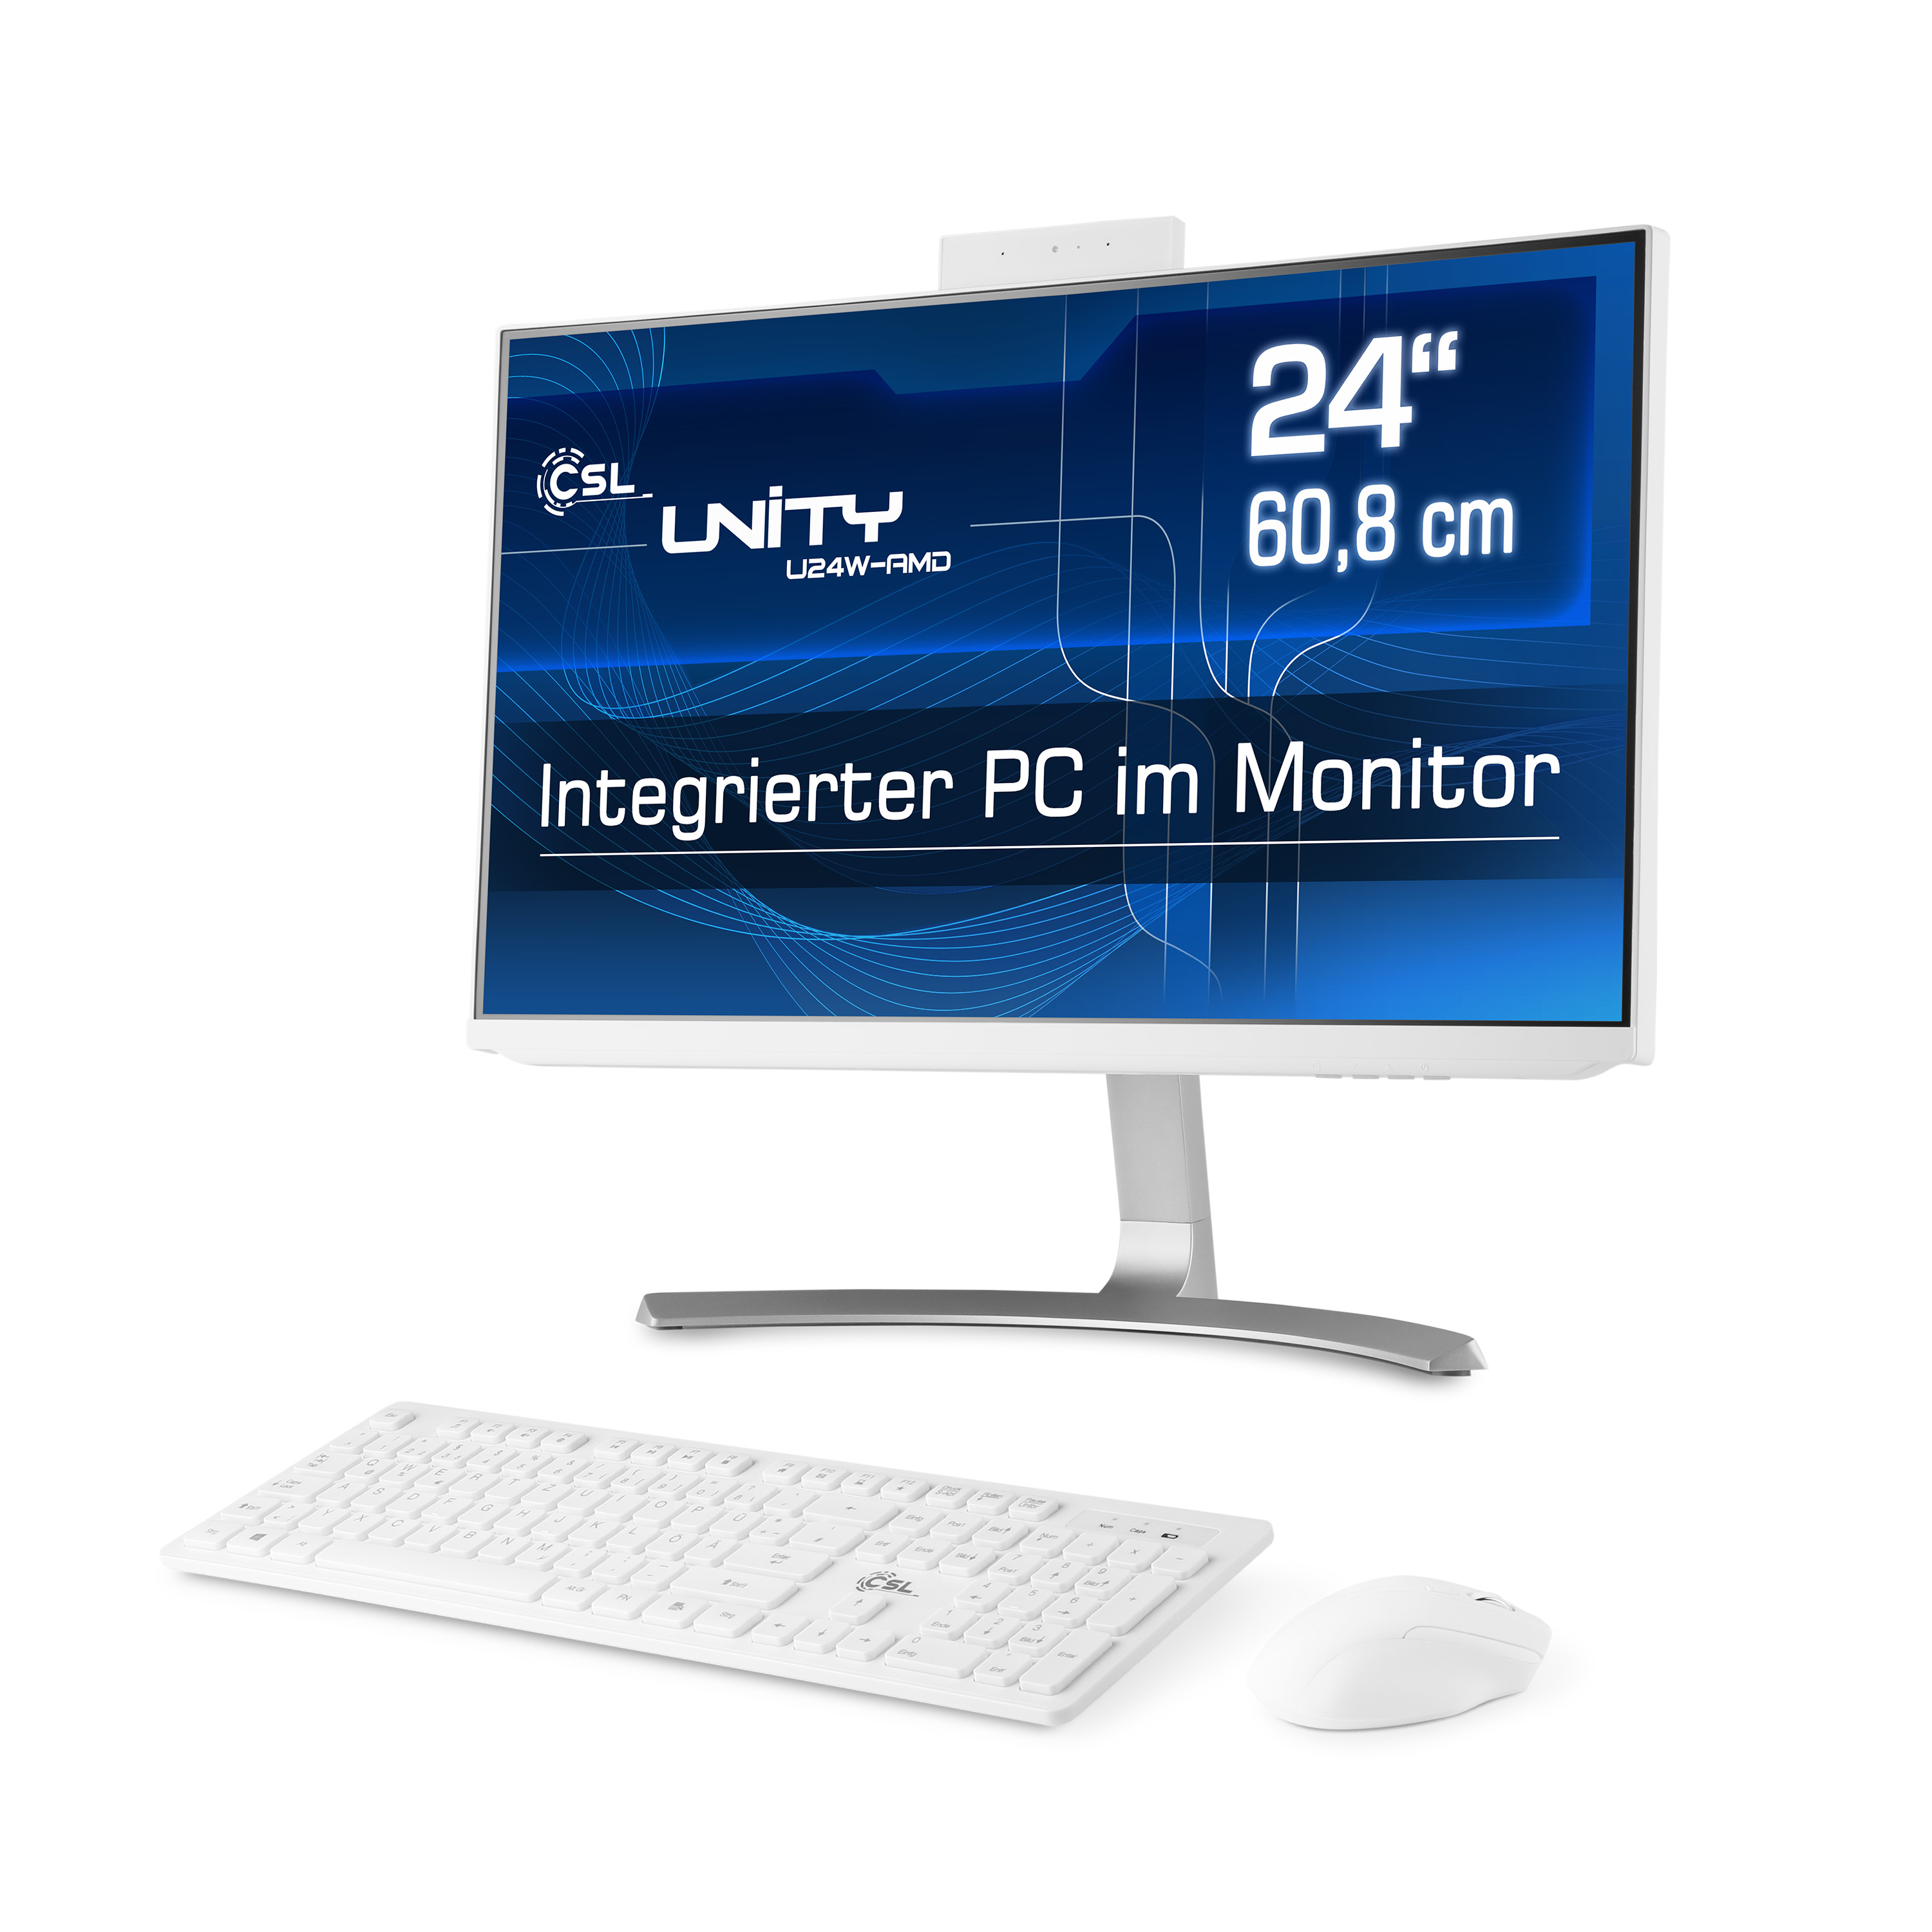 Unity All-in-One-PC / CSL GB 32 / mit RAM, / 32 Home, RAM Graphics, 2000 23,8 U24W-AMD Win GB SSD, 2000 11 5700G / weiß GB Radeon Zoll Display, GB AMD